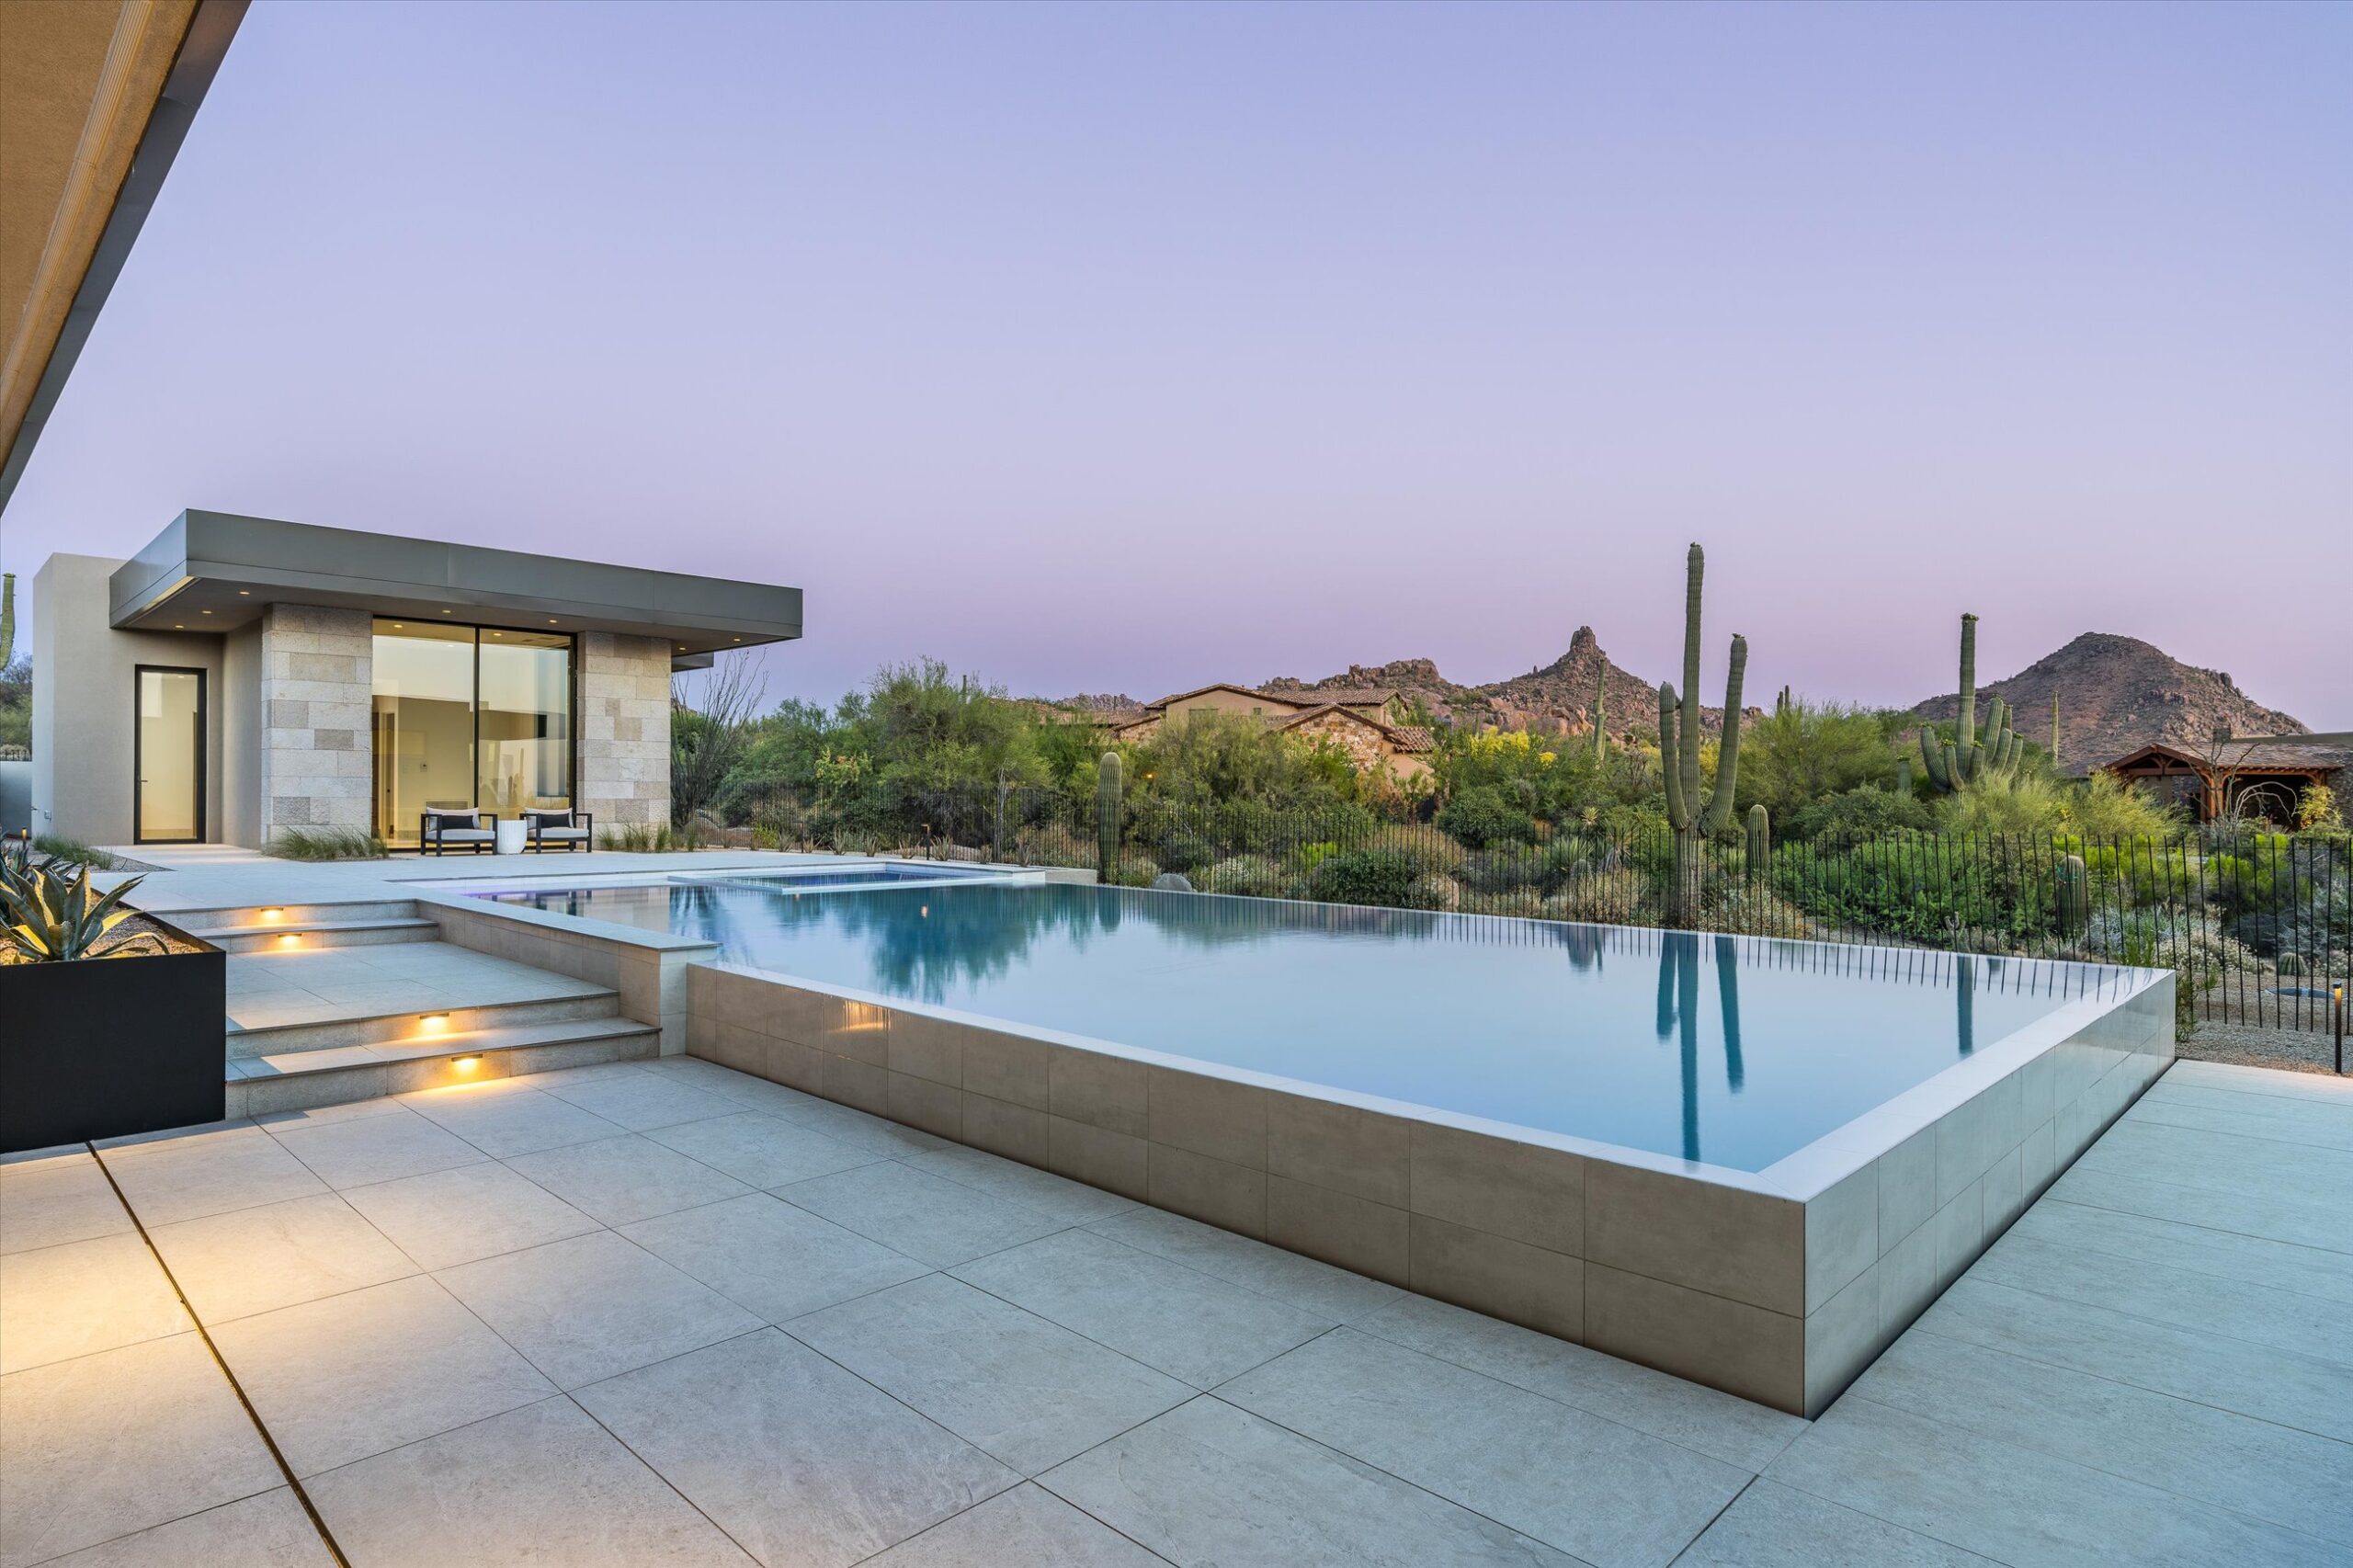 Pinnacle Pavilion in Scottsdale AZ Luxury Outdoor Patio and Infinity Pool